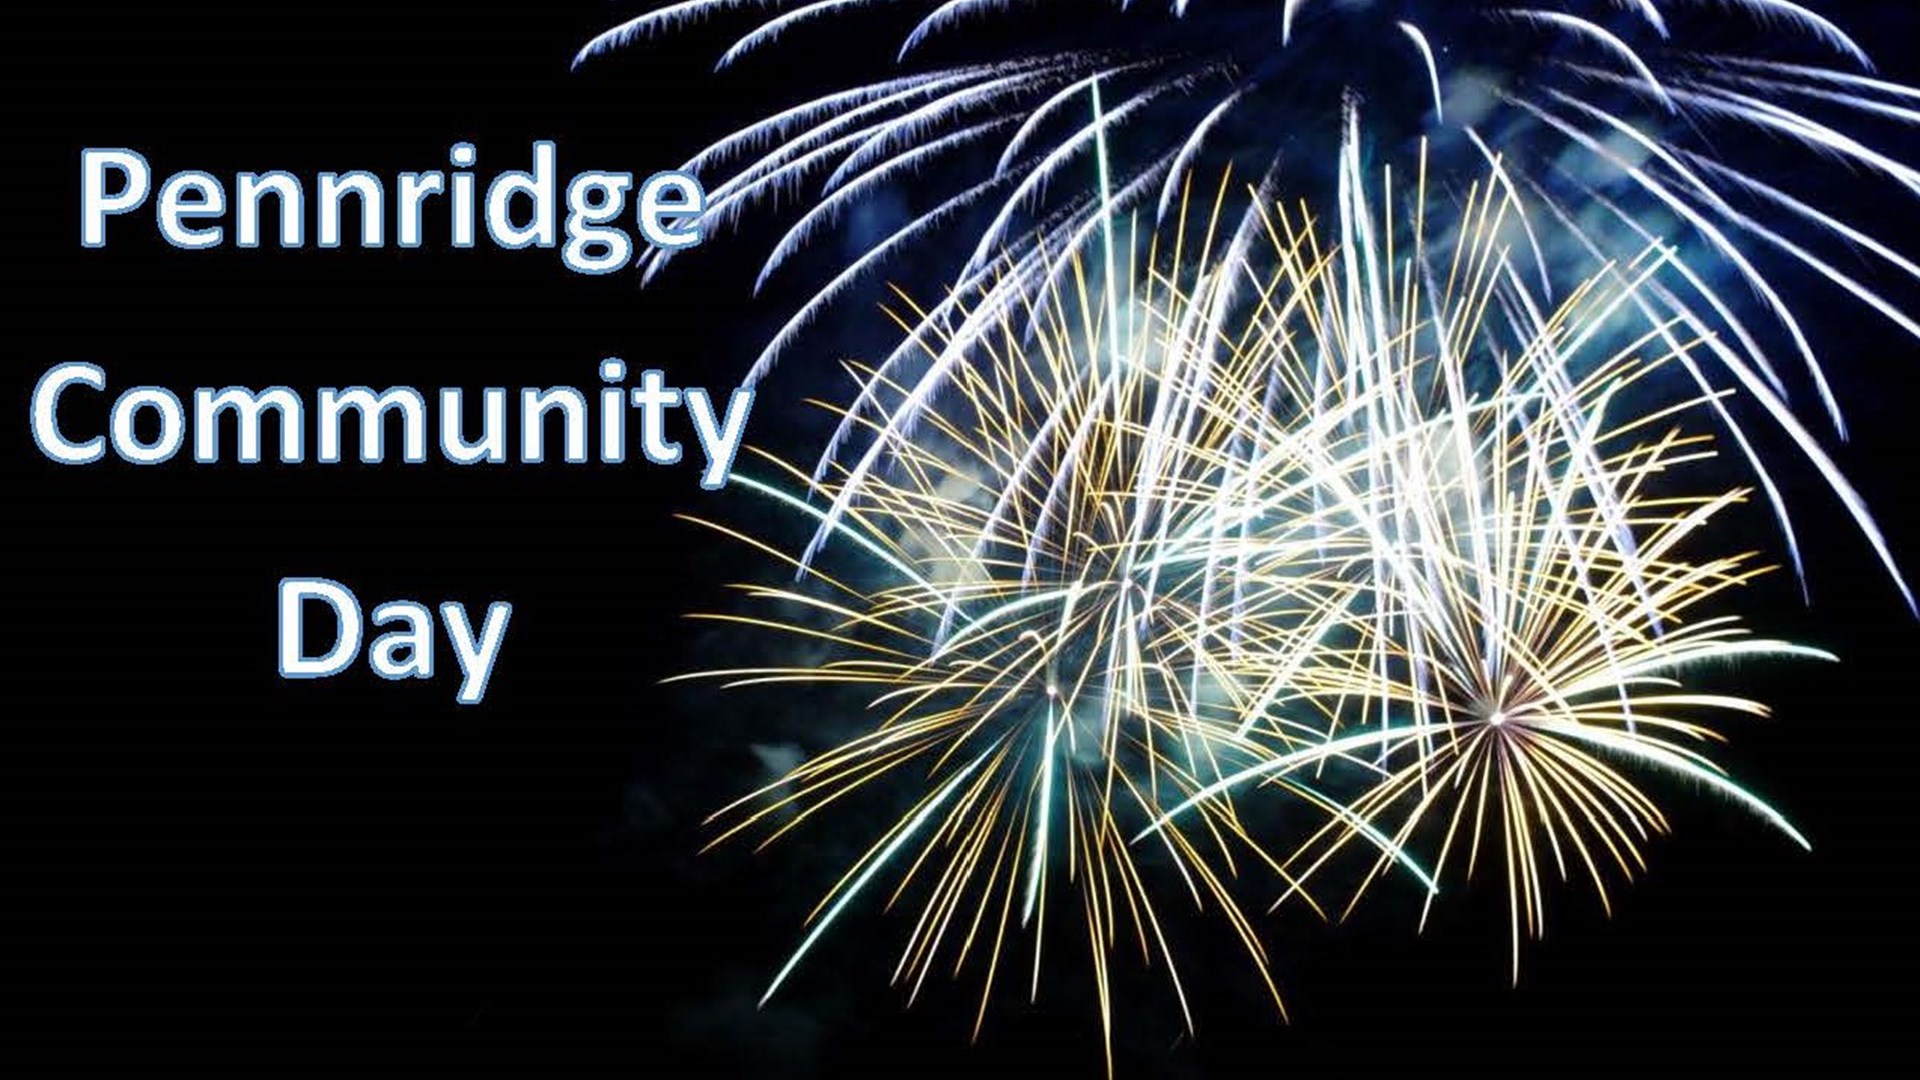 Pennridge Community Day